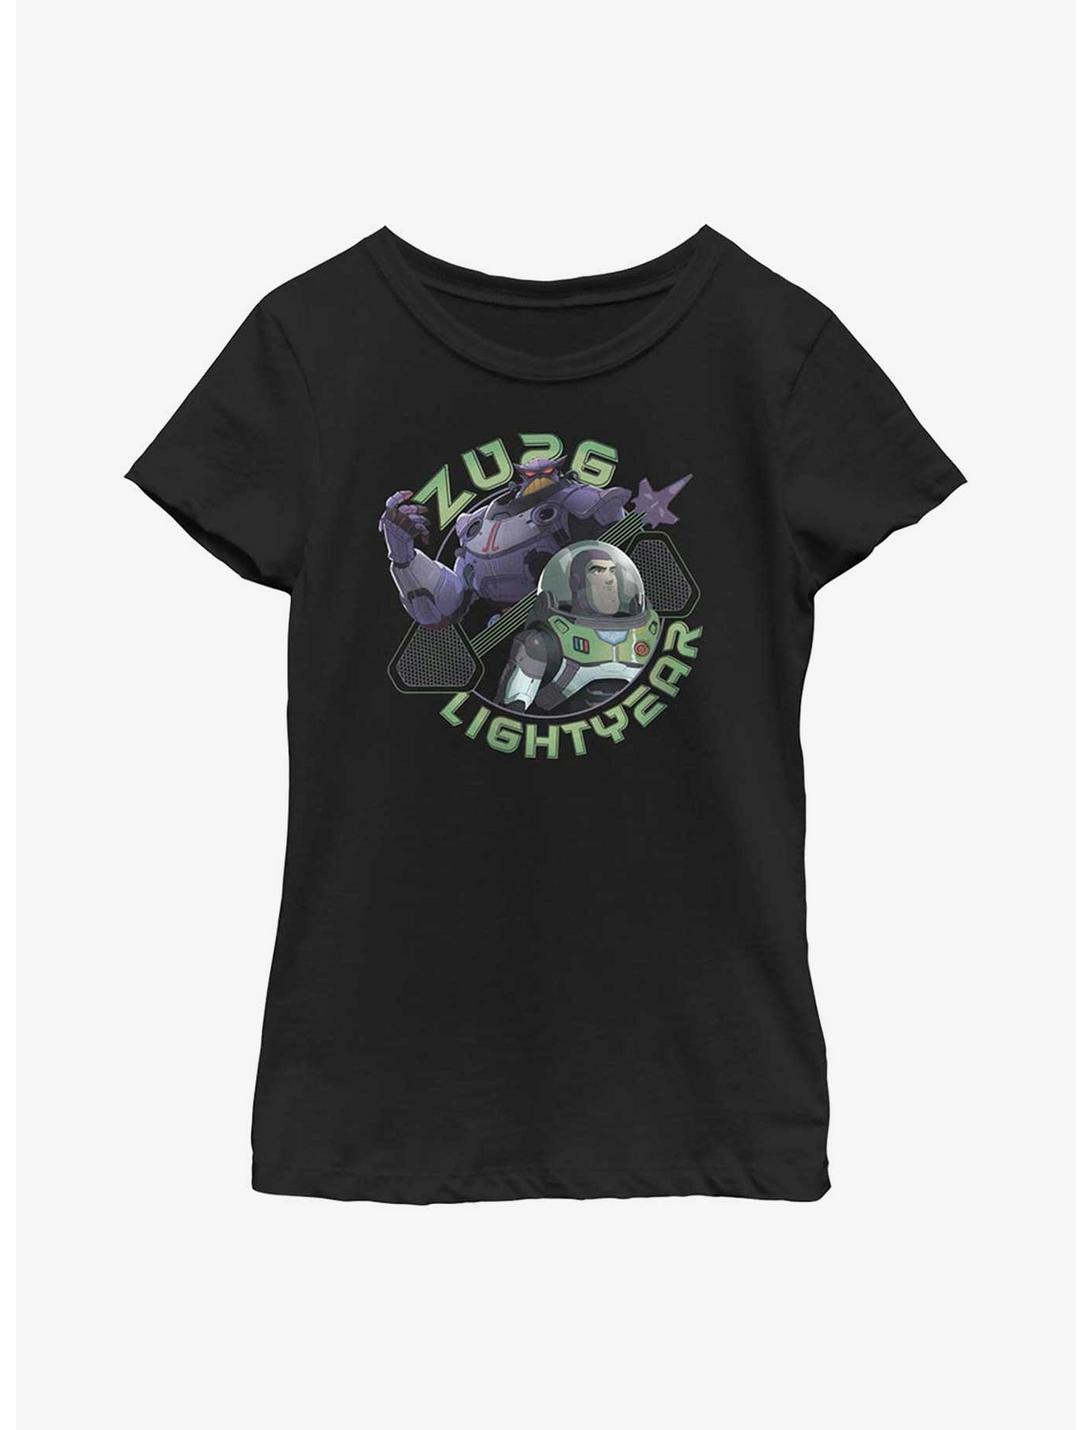 Disney Pixar Lightyear Two Sides Youth Girls T-Shirt, BLACK, hi-res